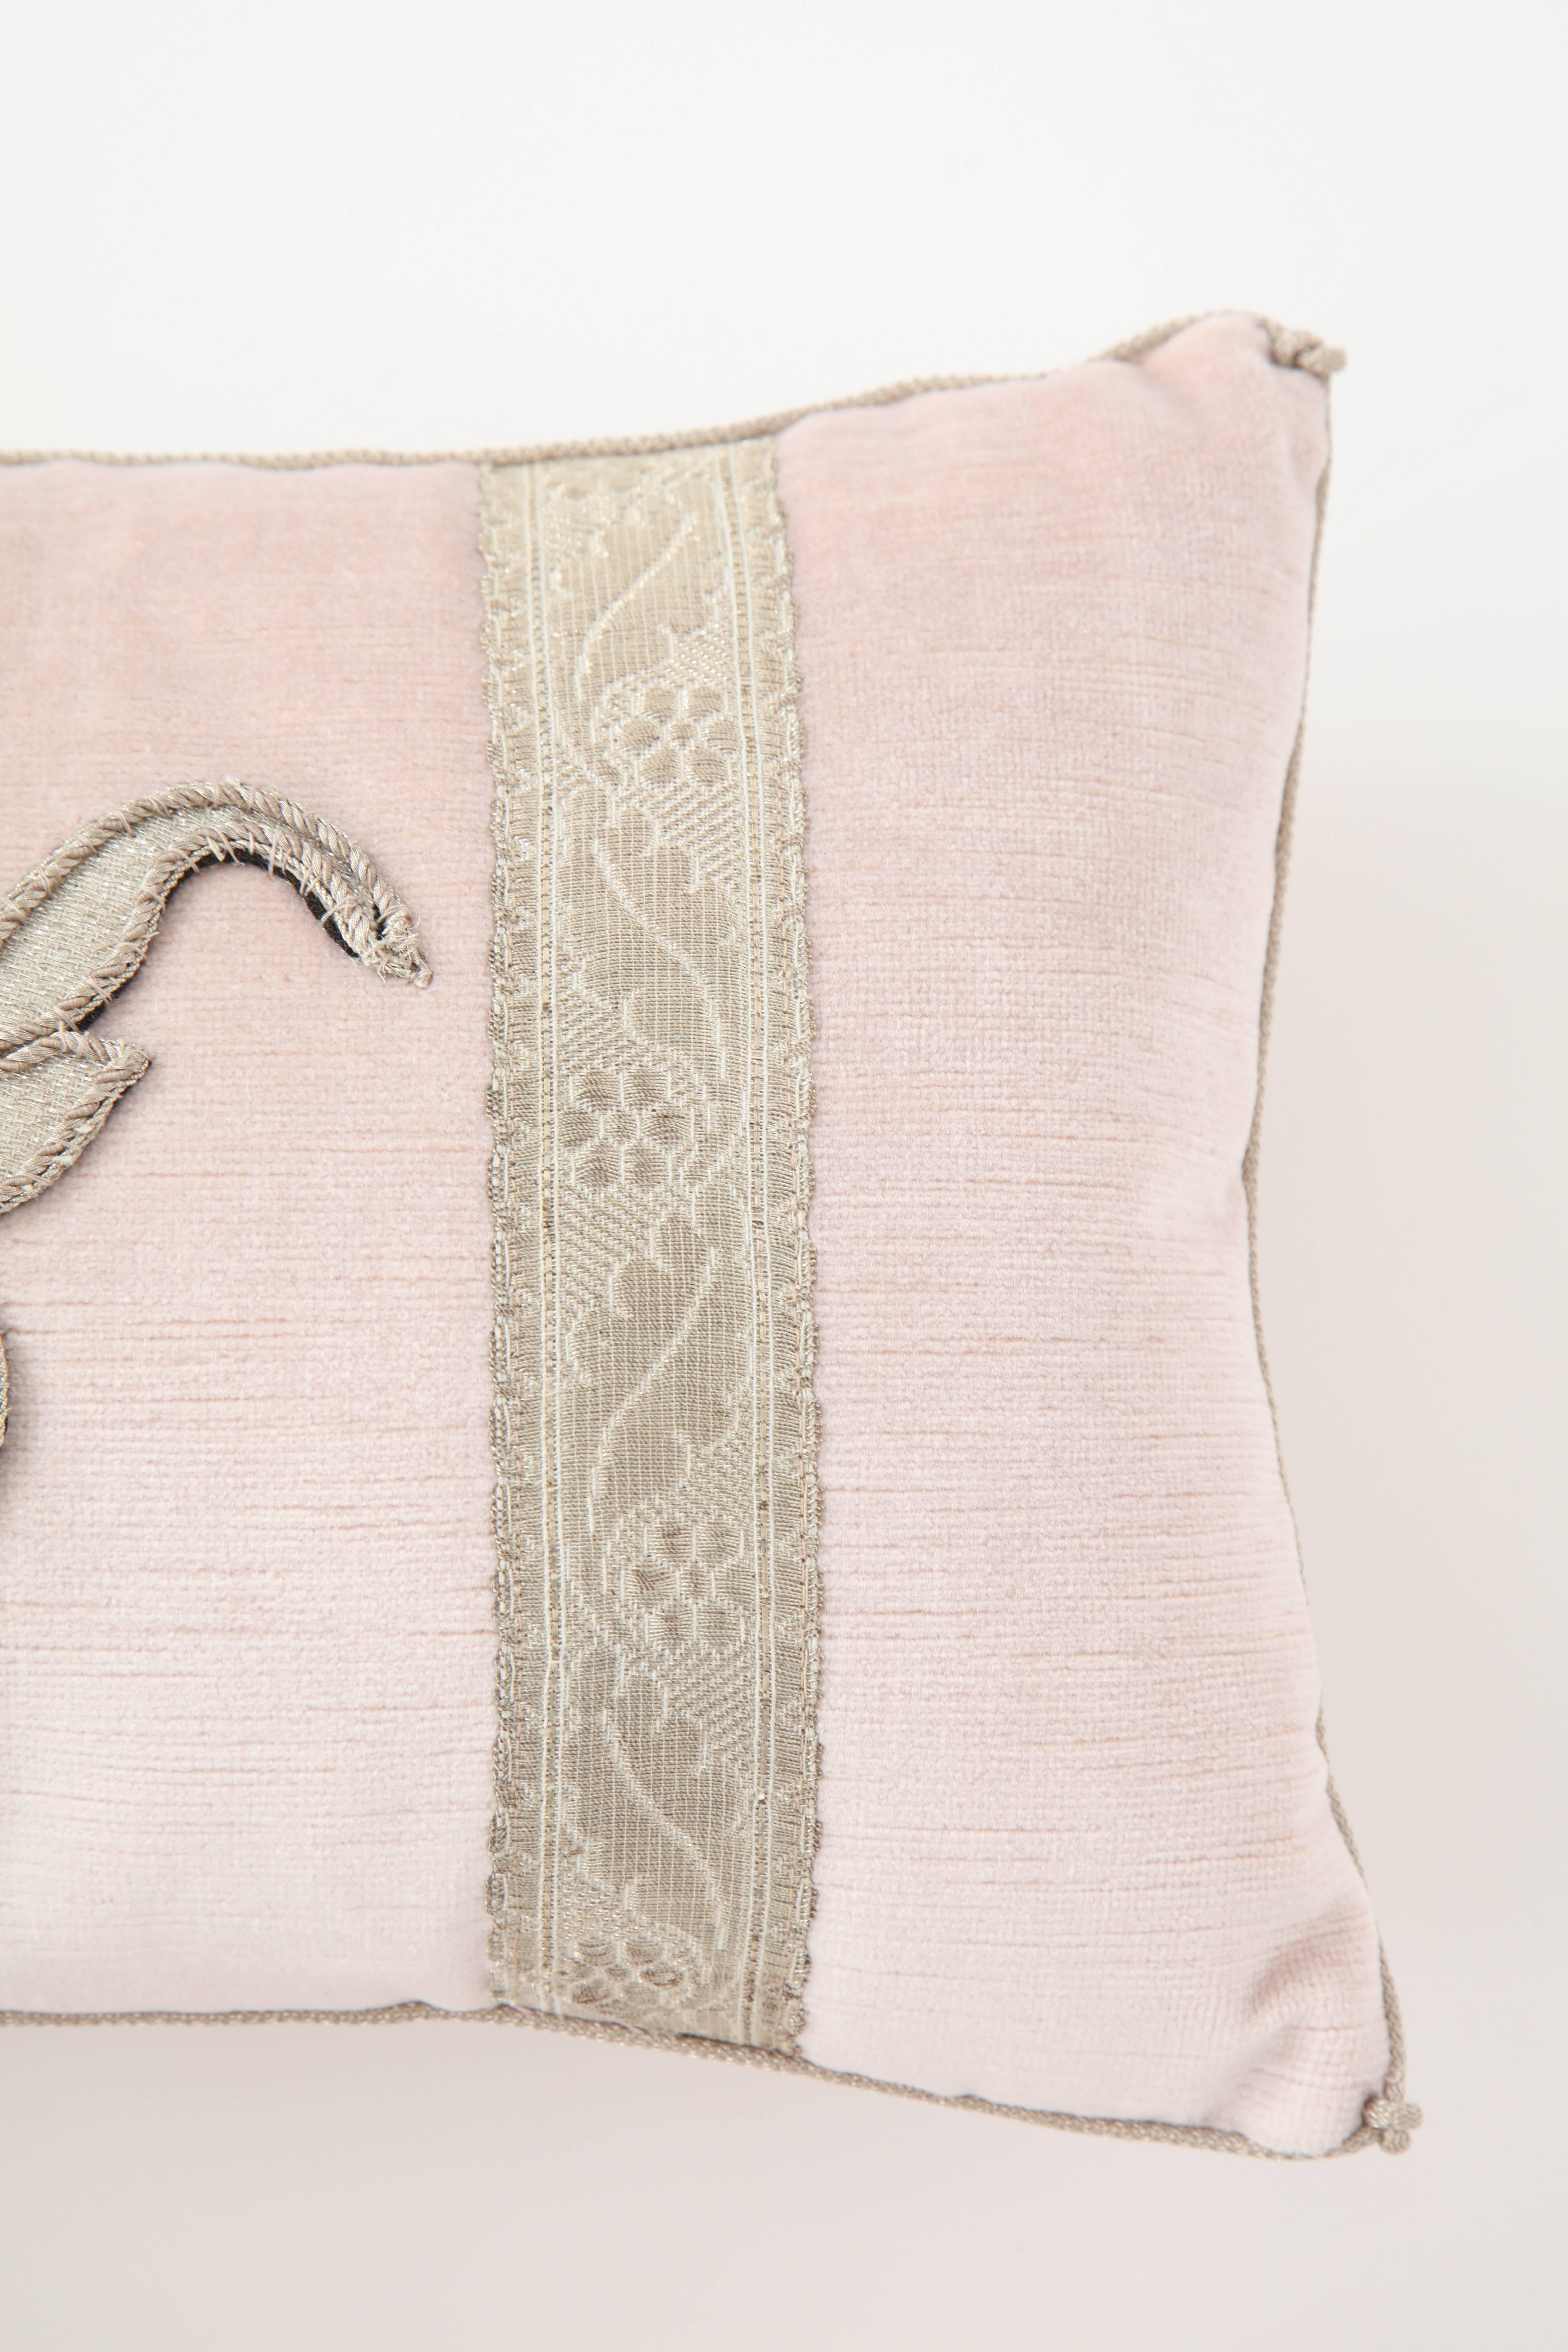 American Pair of Blush Pink Velvet Pillows